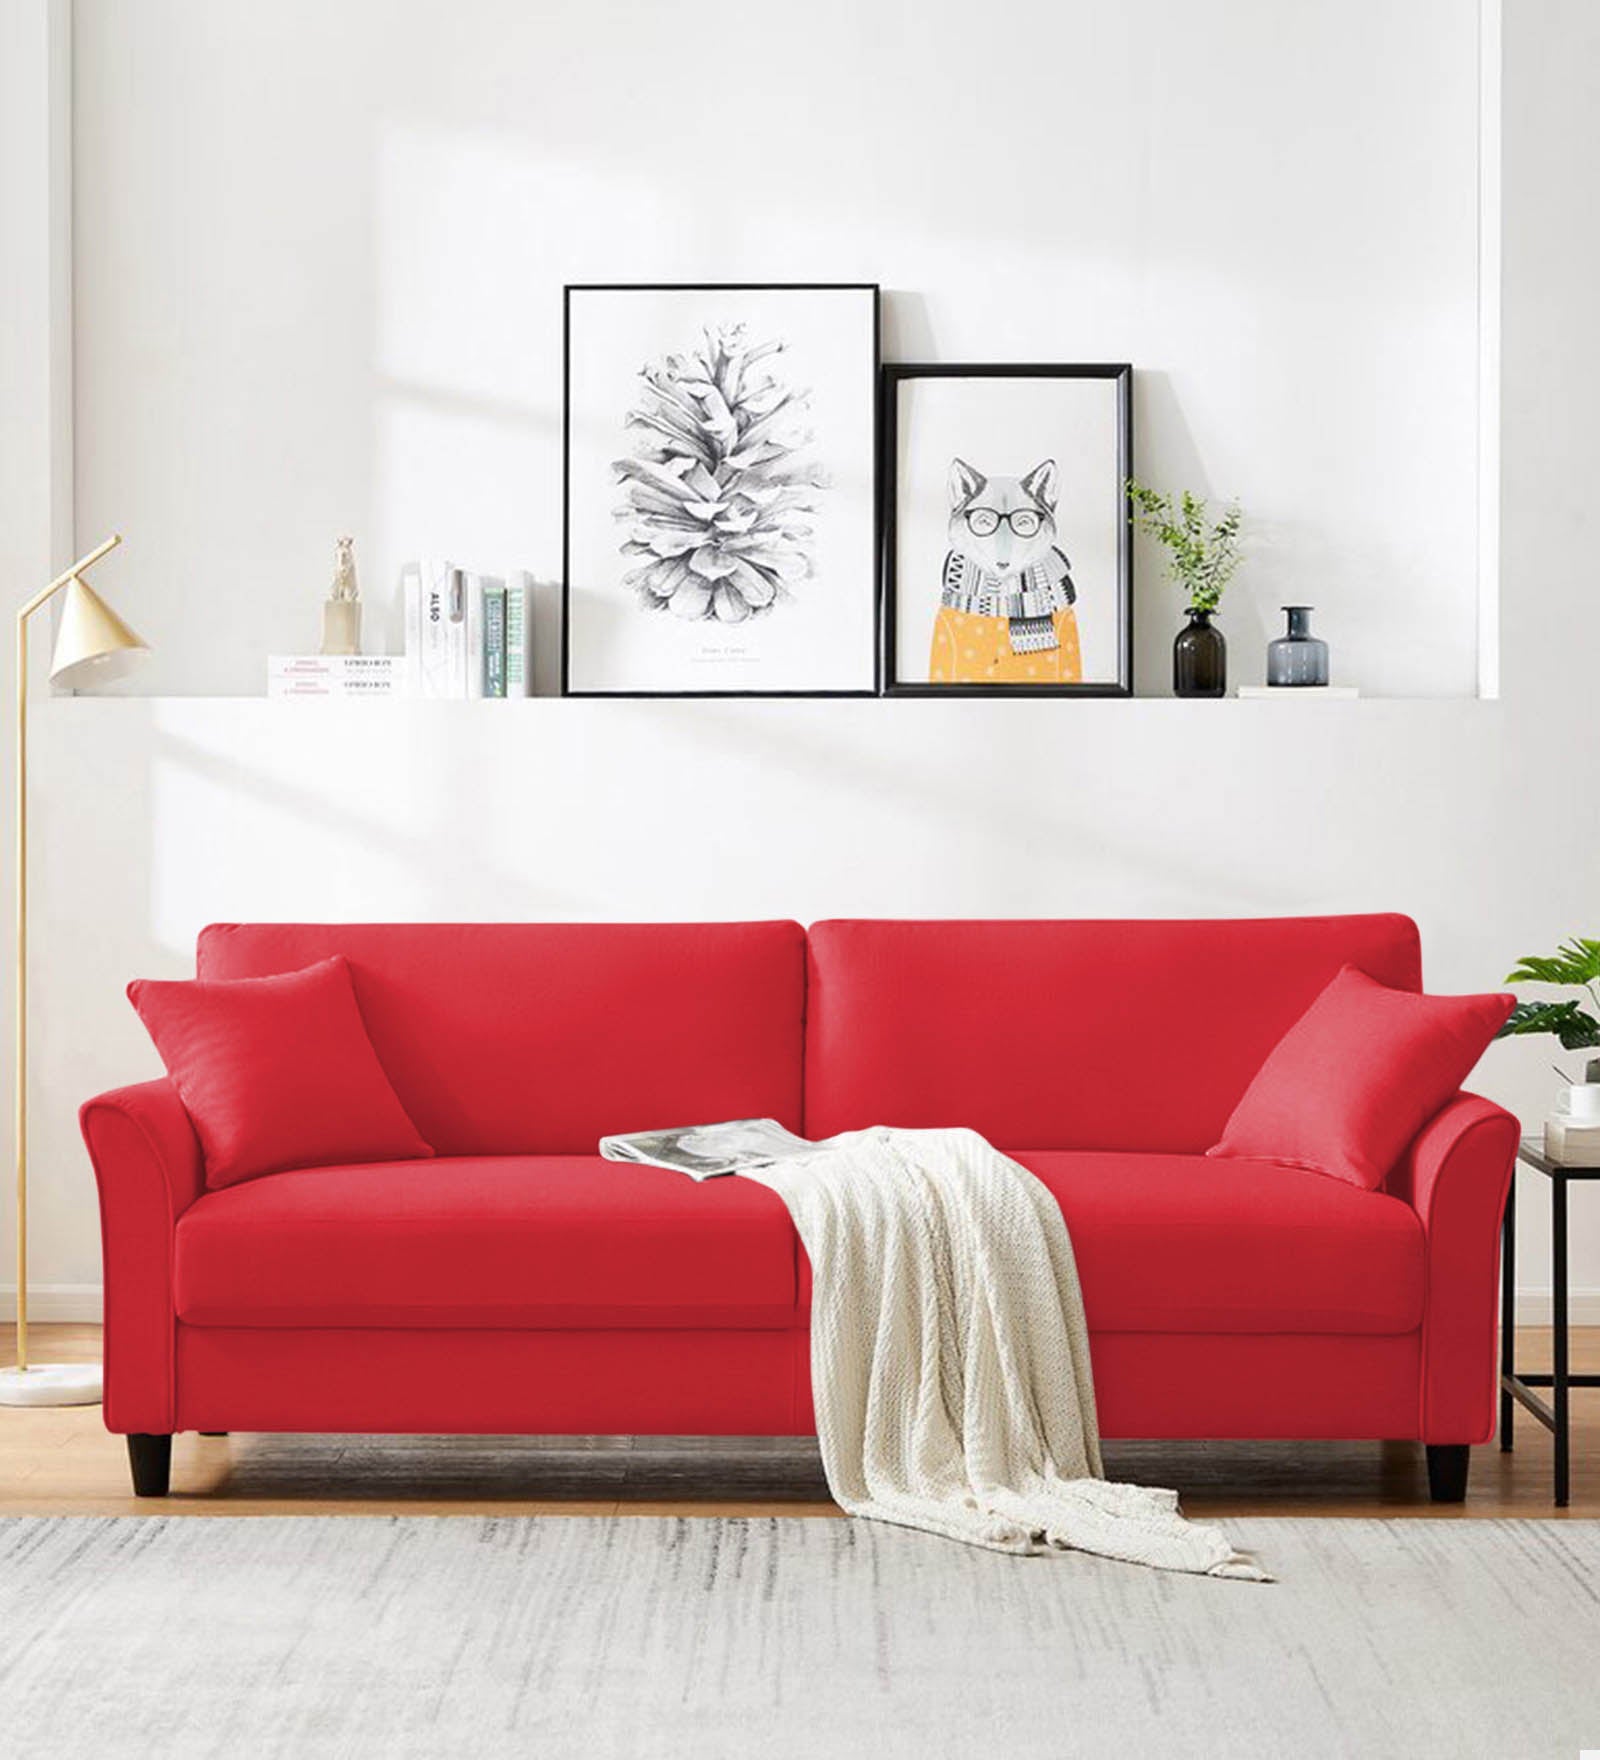 Daroo Velvet 3 Seater Sofa in ox blood maroon Colour